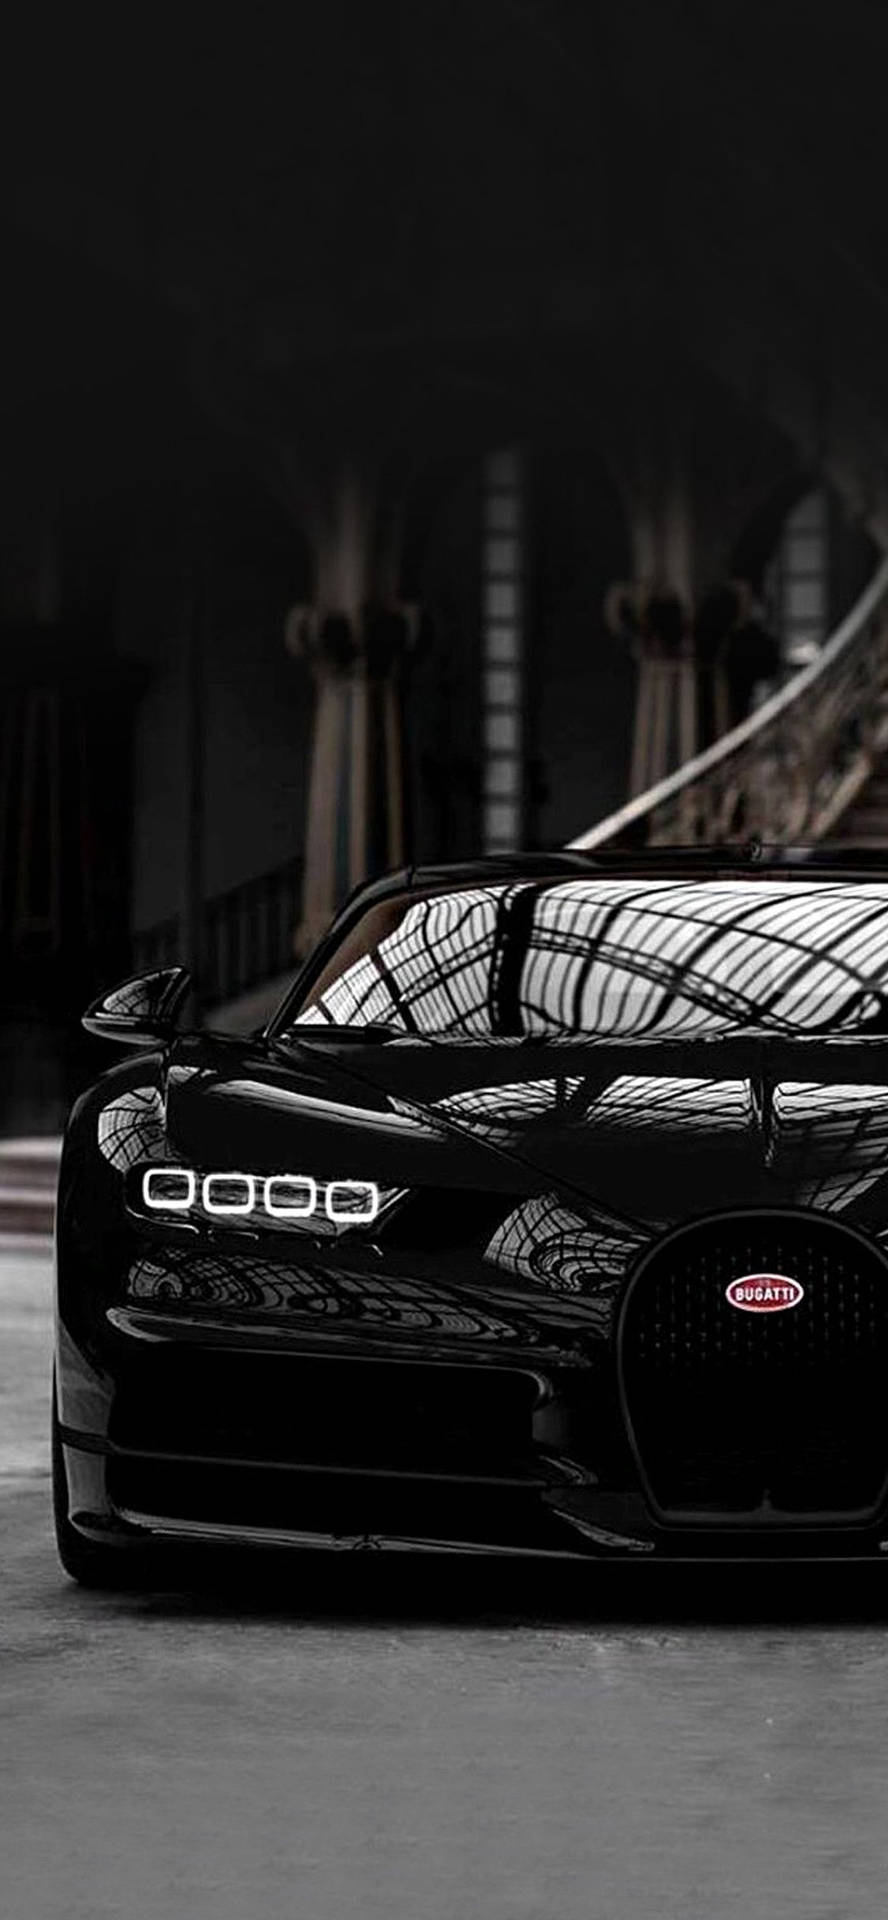 Black Bugatti Chiron Car Iphone